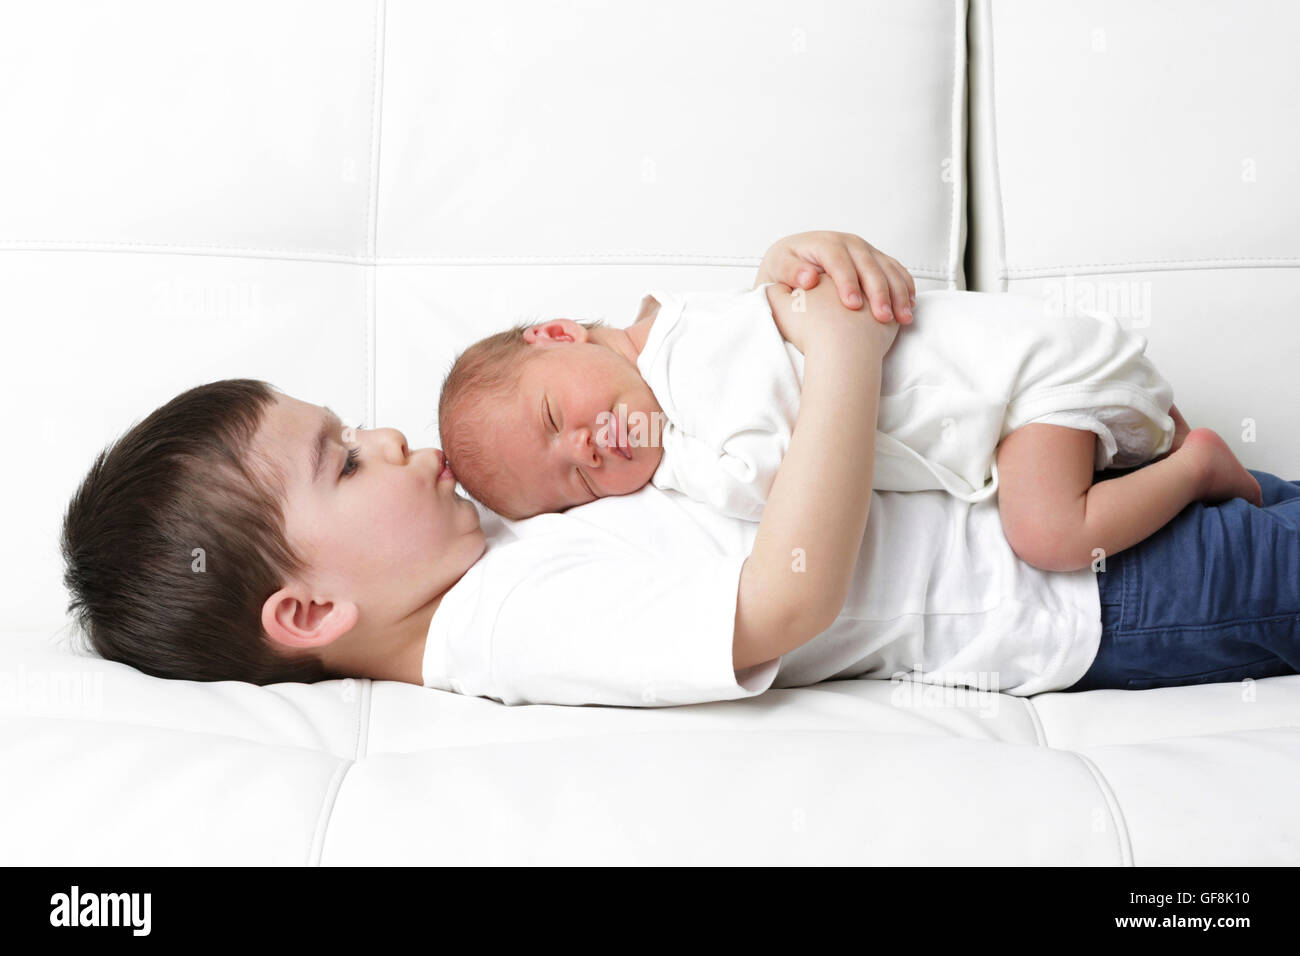 Newborn baby with brother Stock Photo